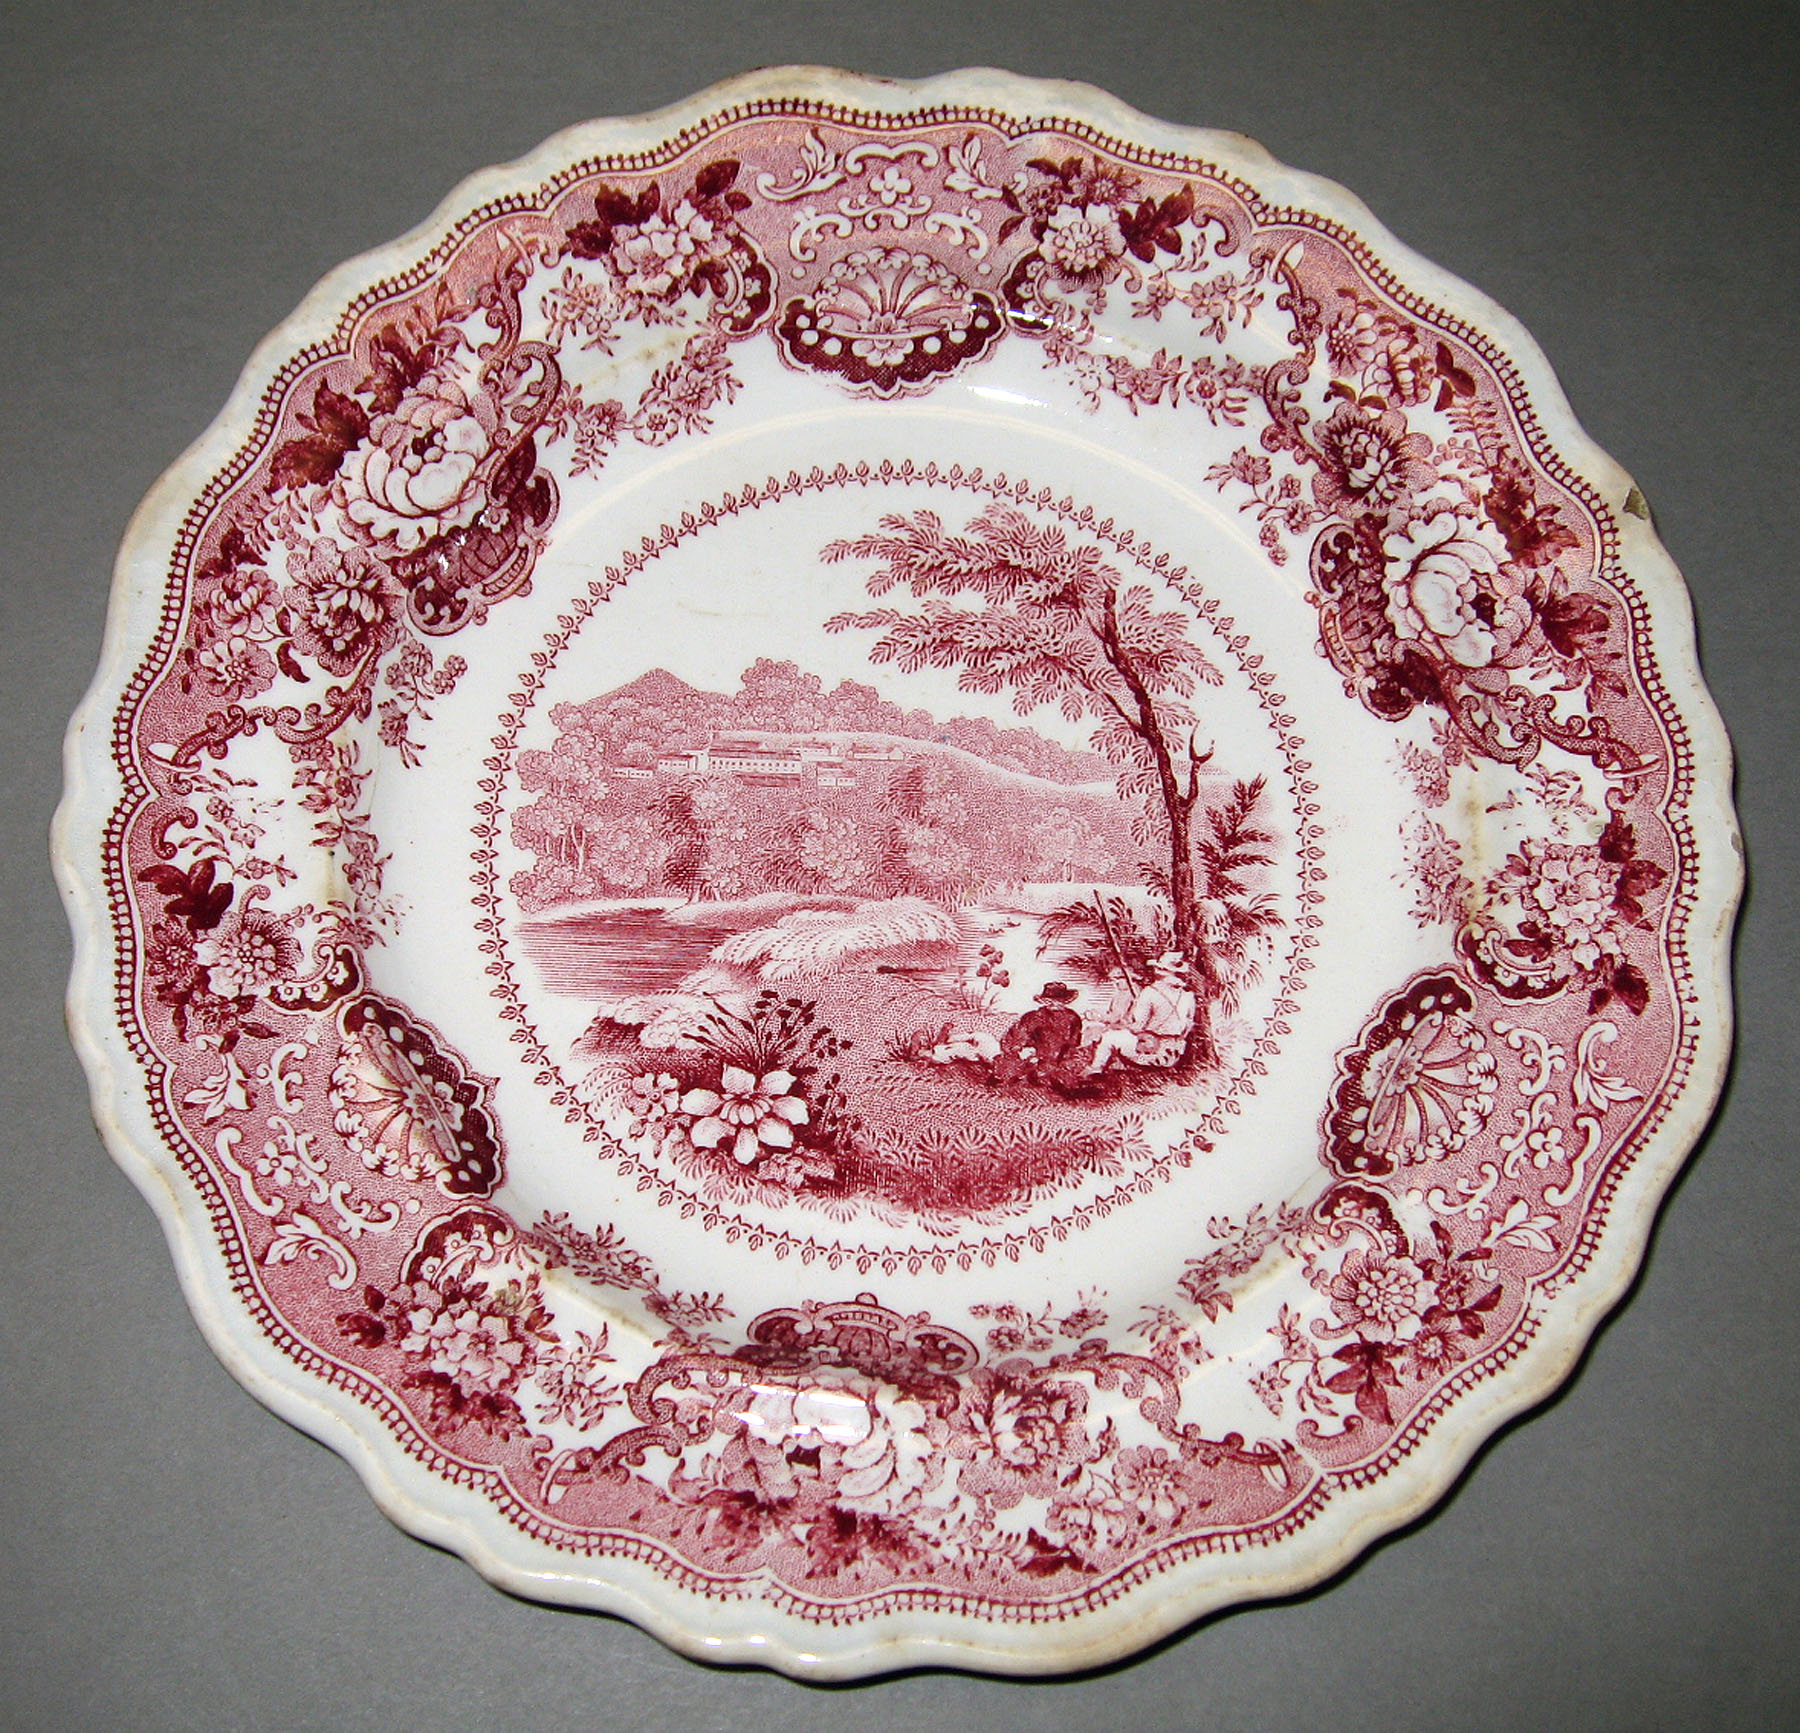 1966.0876.008 Earthenware plate